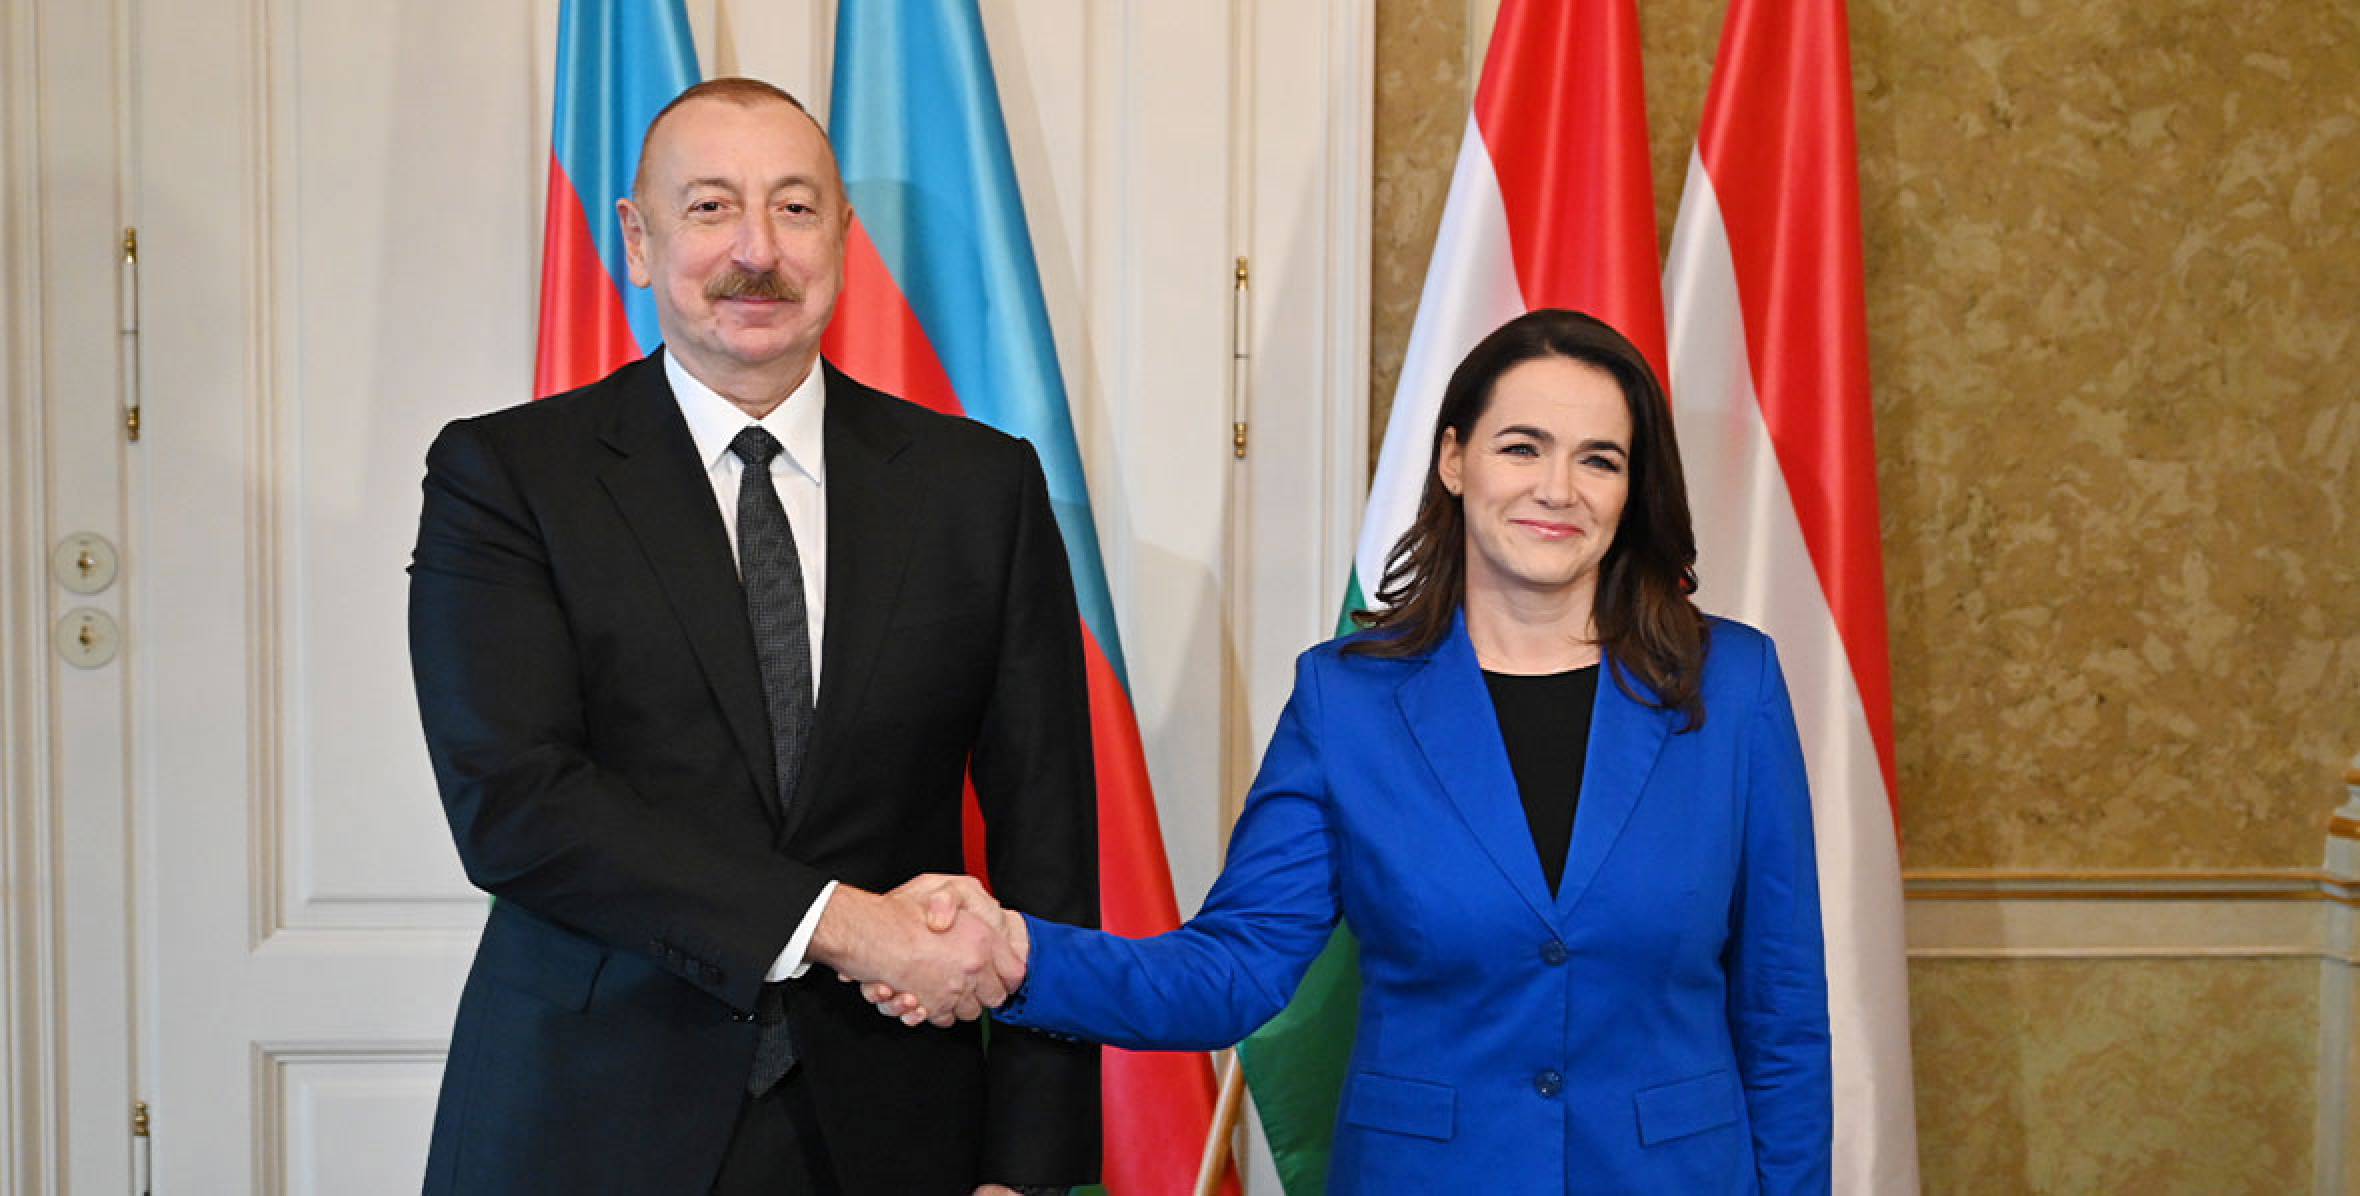 Ilham Aliyev held one-on-one meeting with President of Hungary Katalin Novák